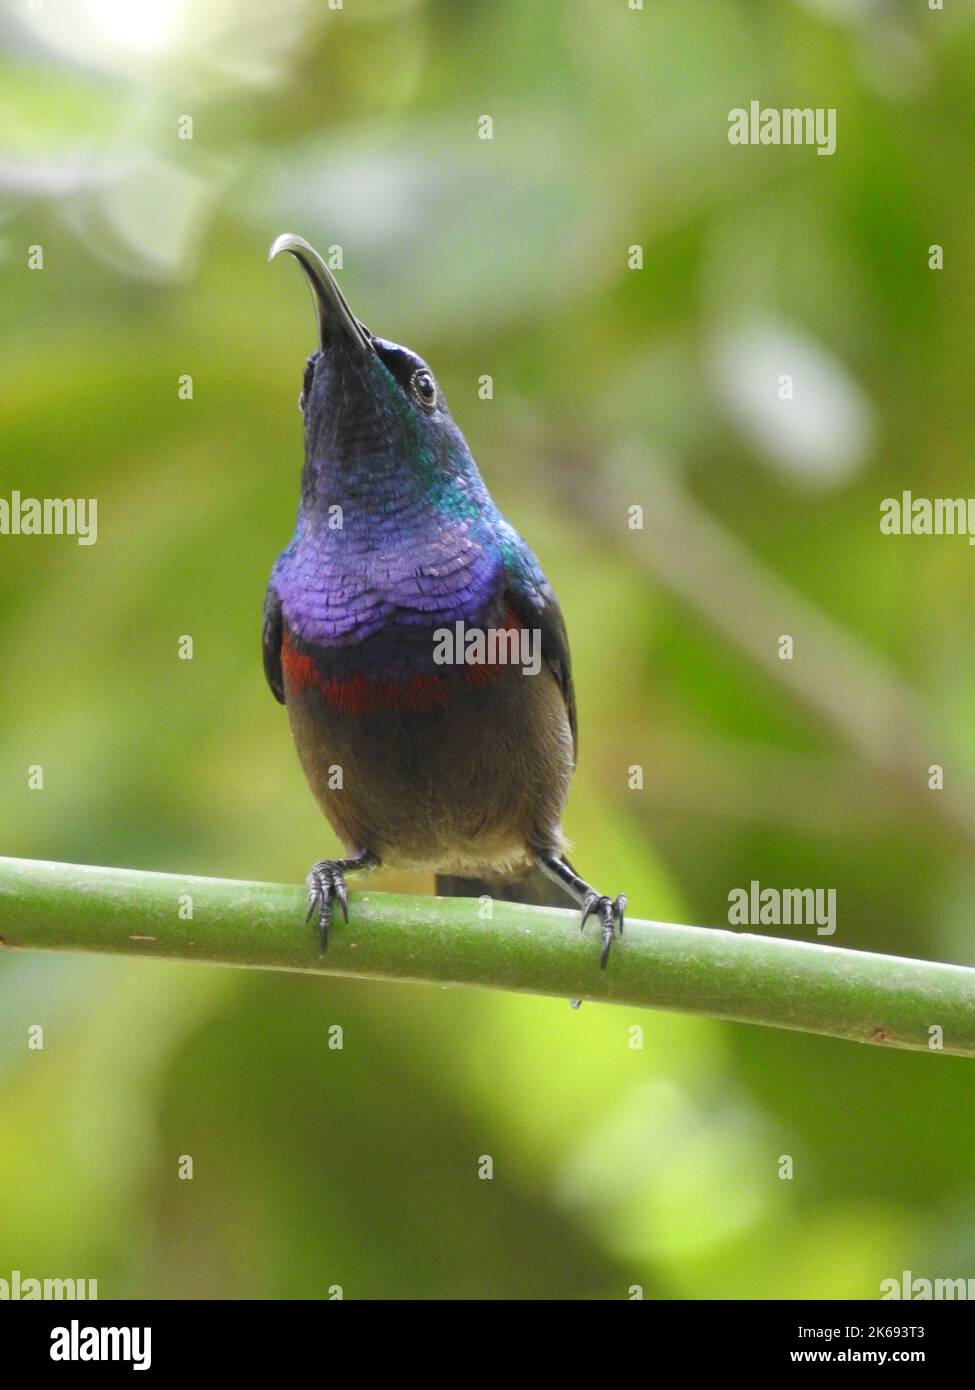 A vertical shot of a cute little Loten's sunbird with a long curving beak perched on a green branch Stock Photo